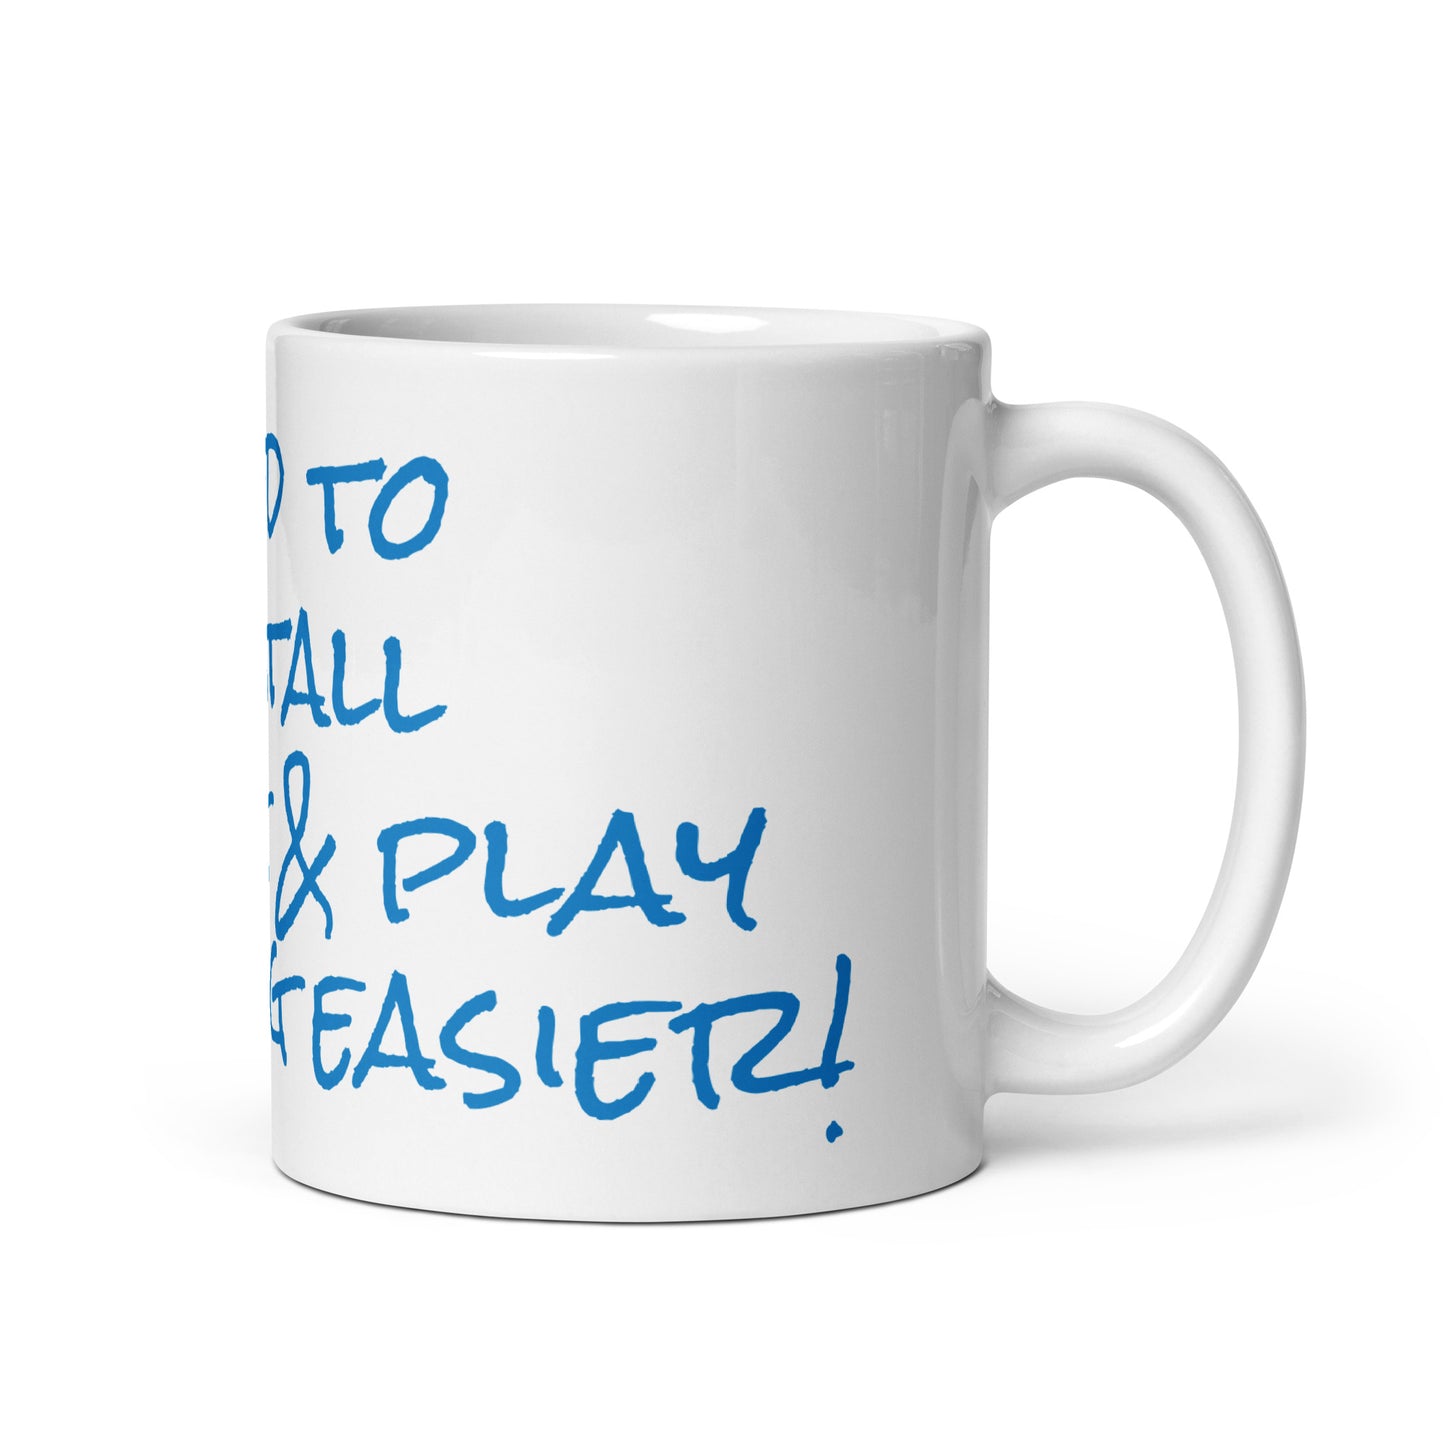 I need to uninstall adulting and play something easier (blue) - White glossy mug